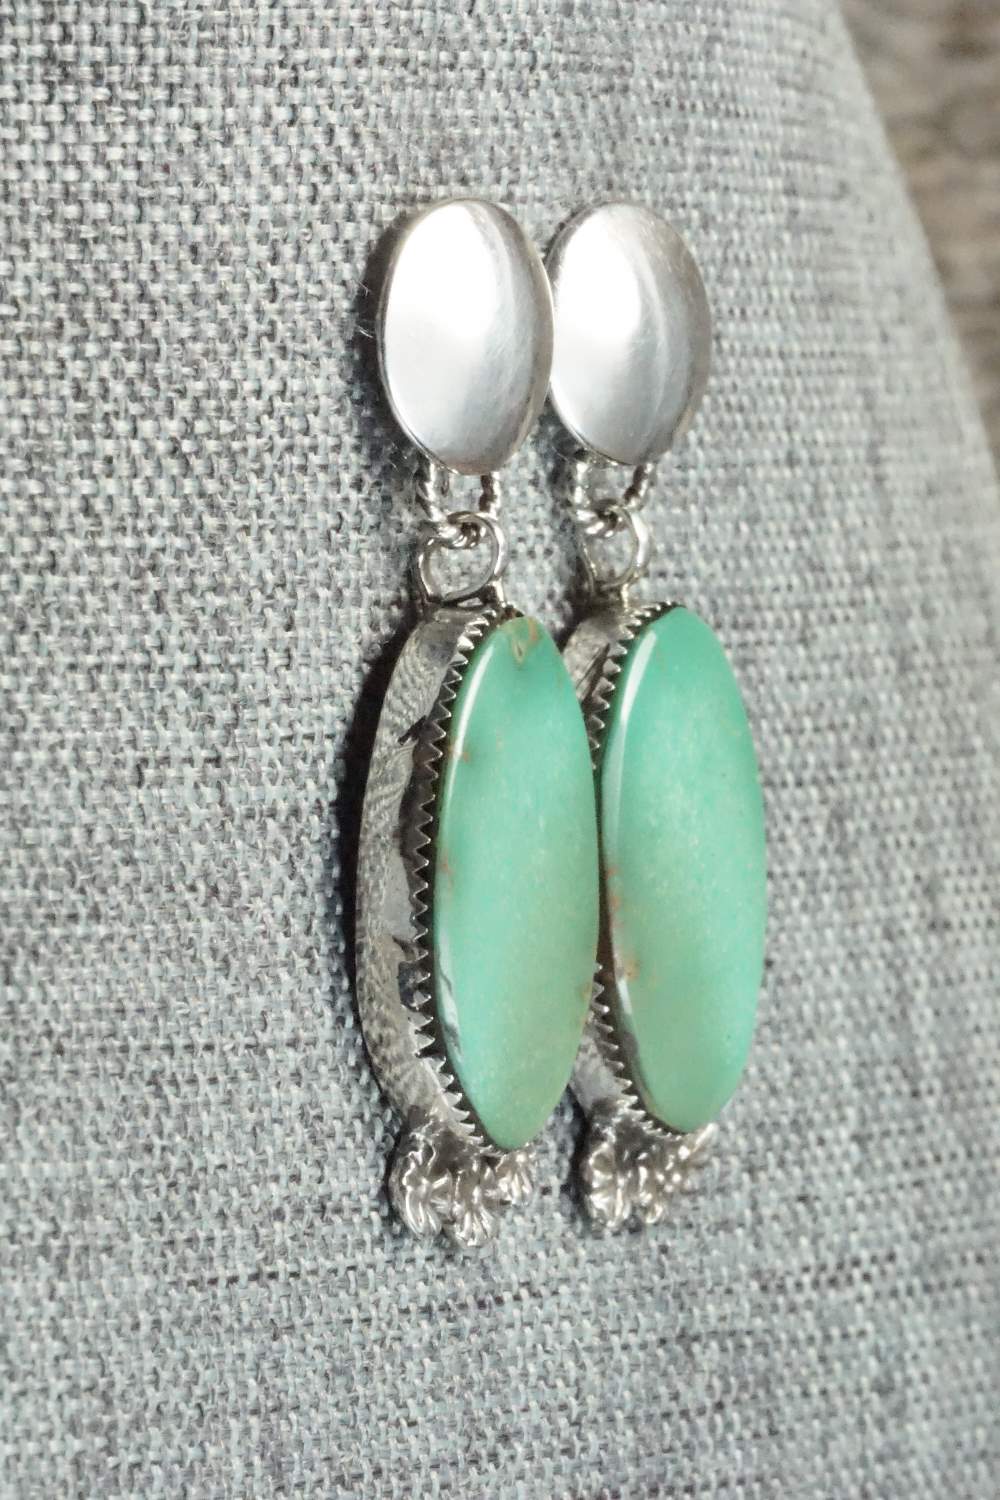 Turquoise & Sterling Silver Earrings - Selina Warner